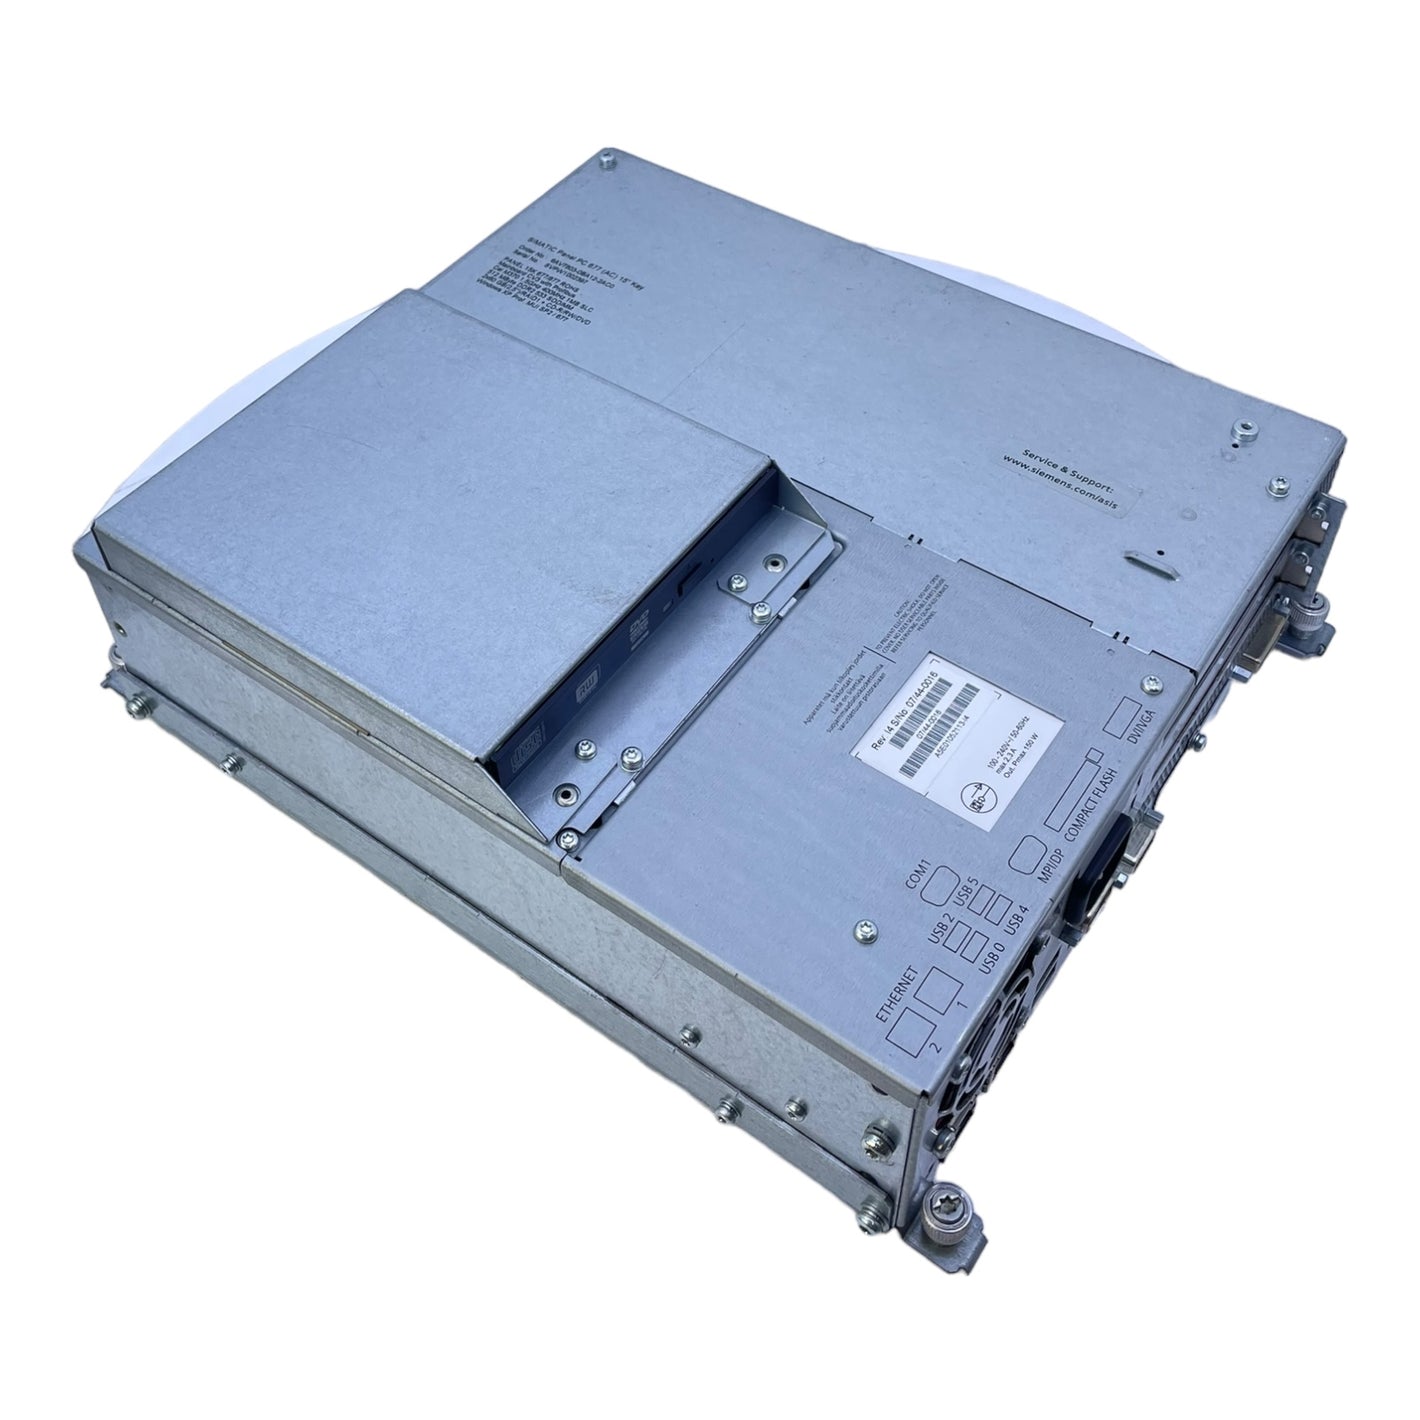 Siemens 6AV7803-0BA12-2AC0 Panel PC for industrial use 6AV7803-0BA12-2AC0 